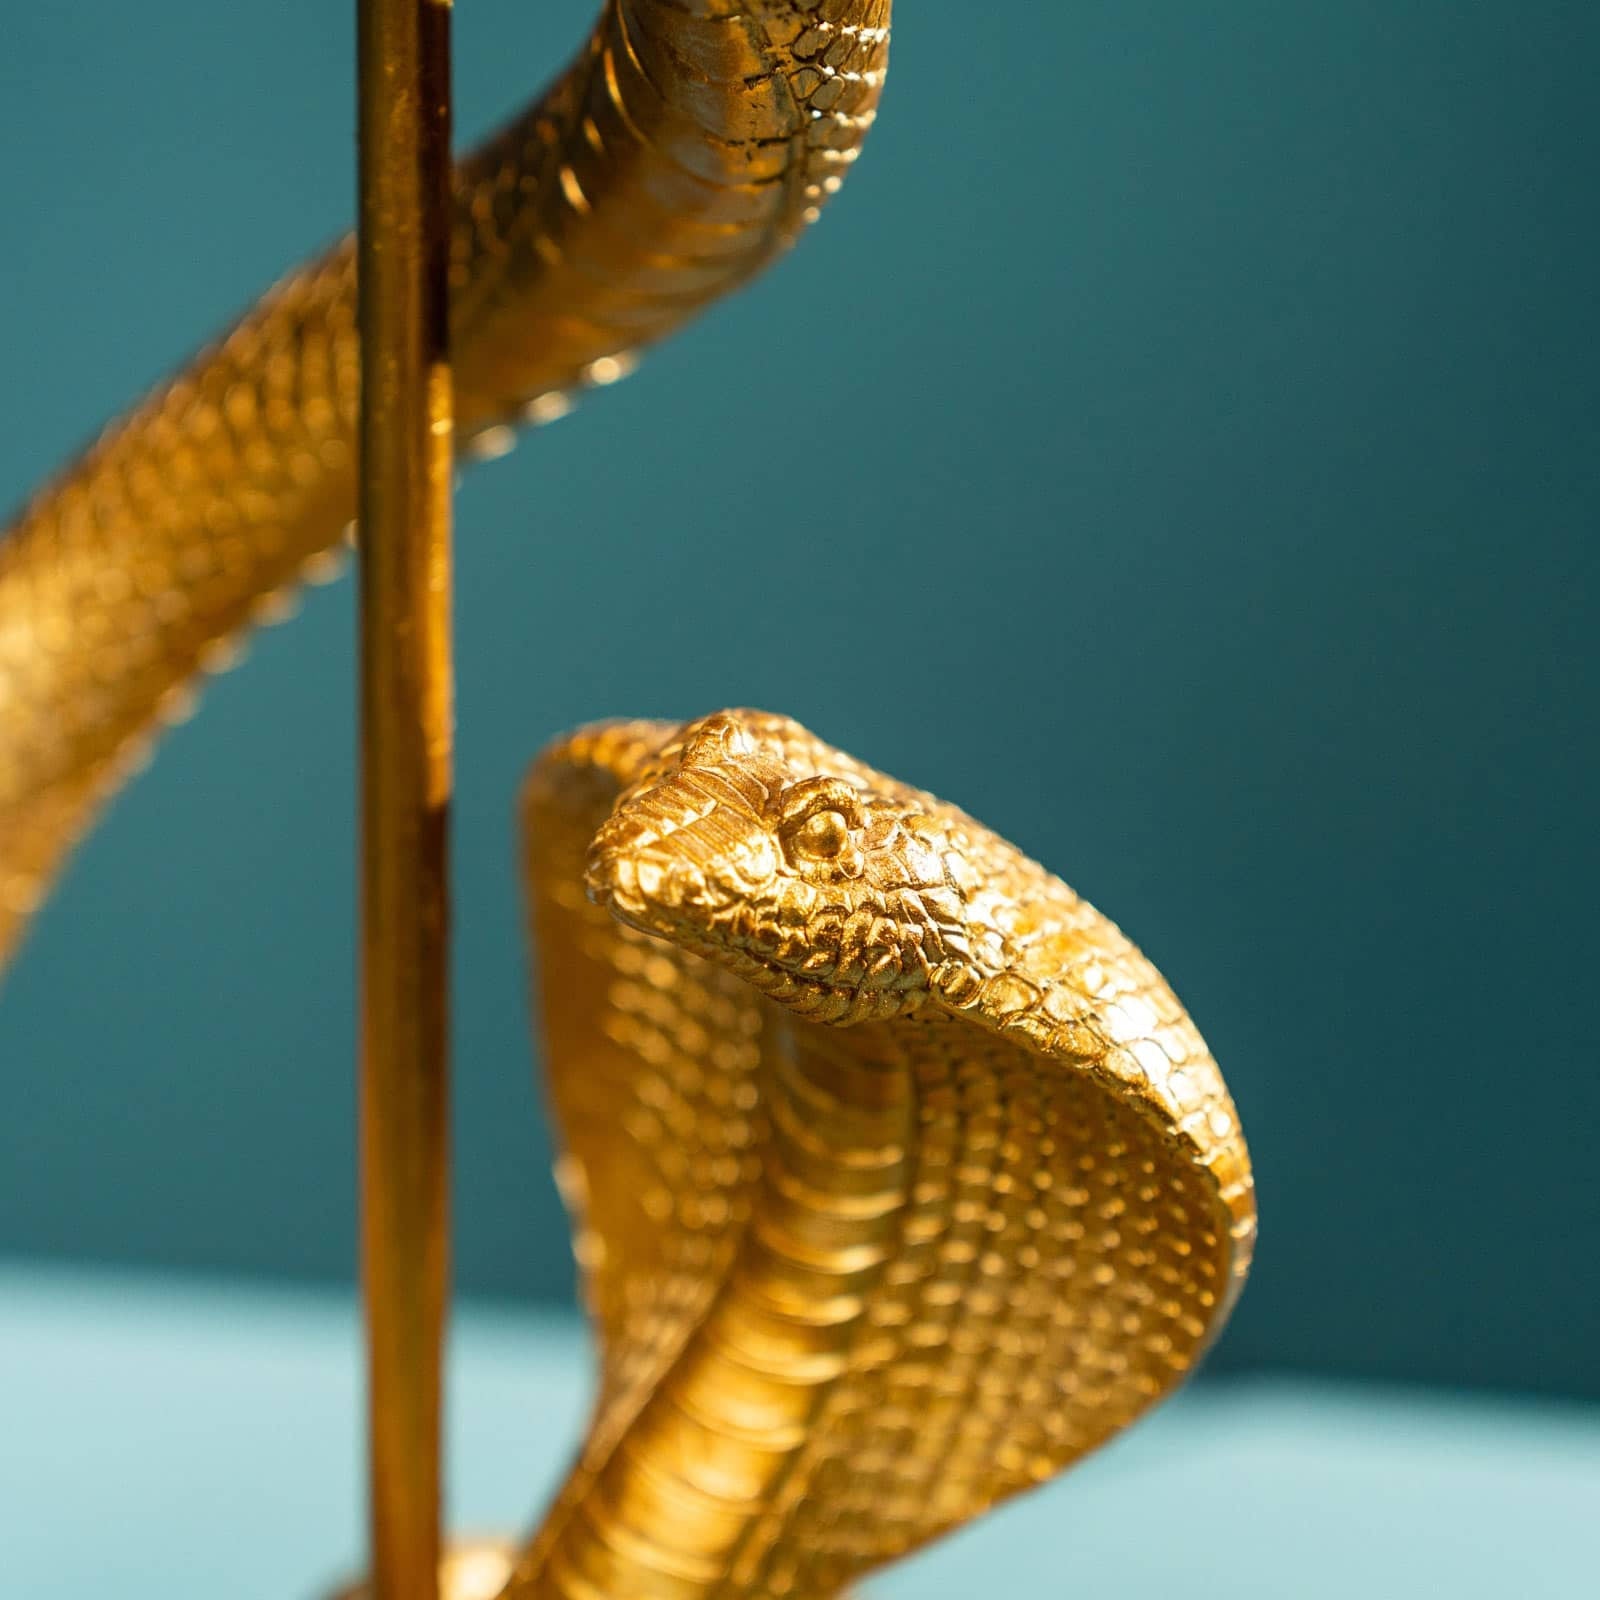 Antique Gold Snake Table Lamp Simon - |VESIMI Design| Luxury Bathrooms and Home Decor